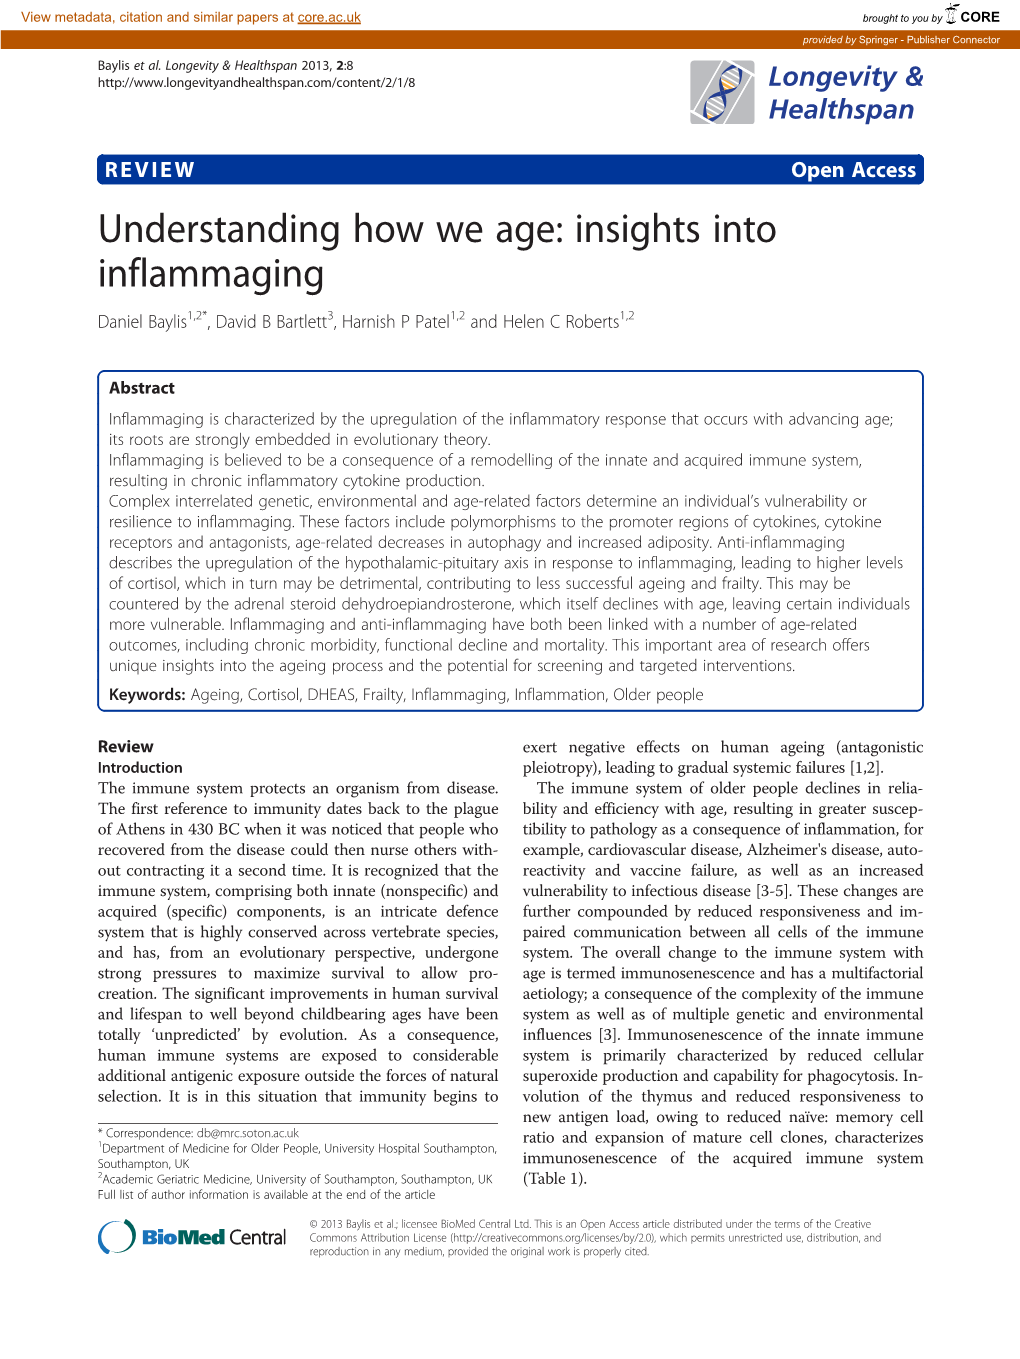 Understanding How We Age: Insights Into Inflammaging Daniel Baylis1,2*, David B Bartlett3, Harnish P Patel1,2 and Helen C Roberts1,2